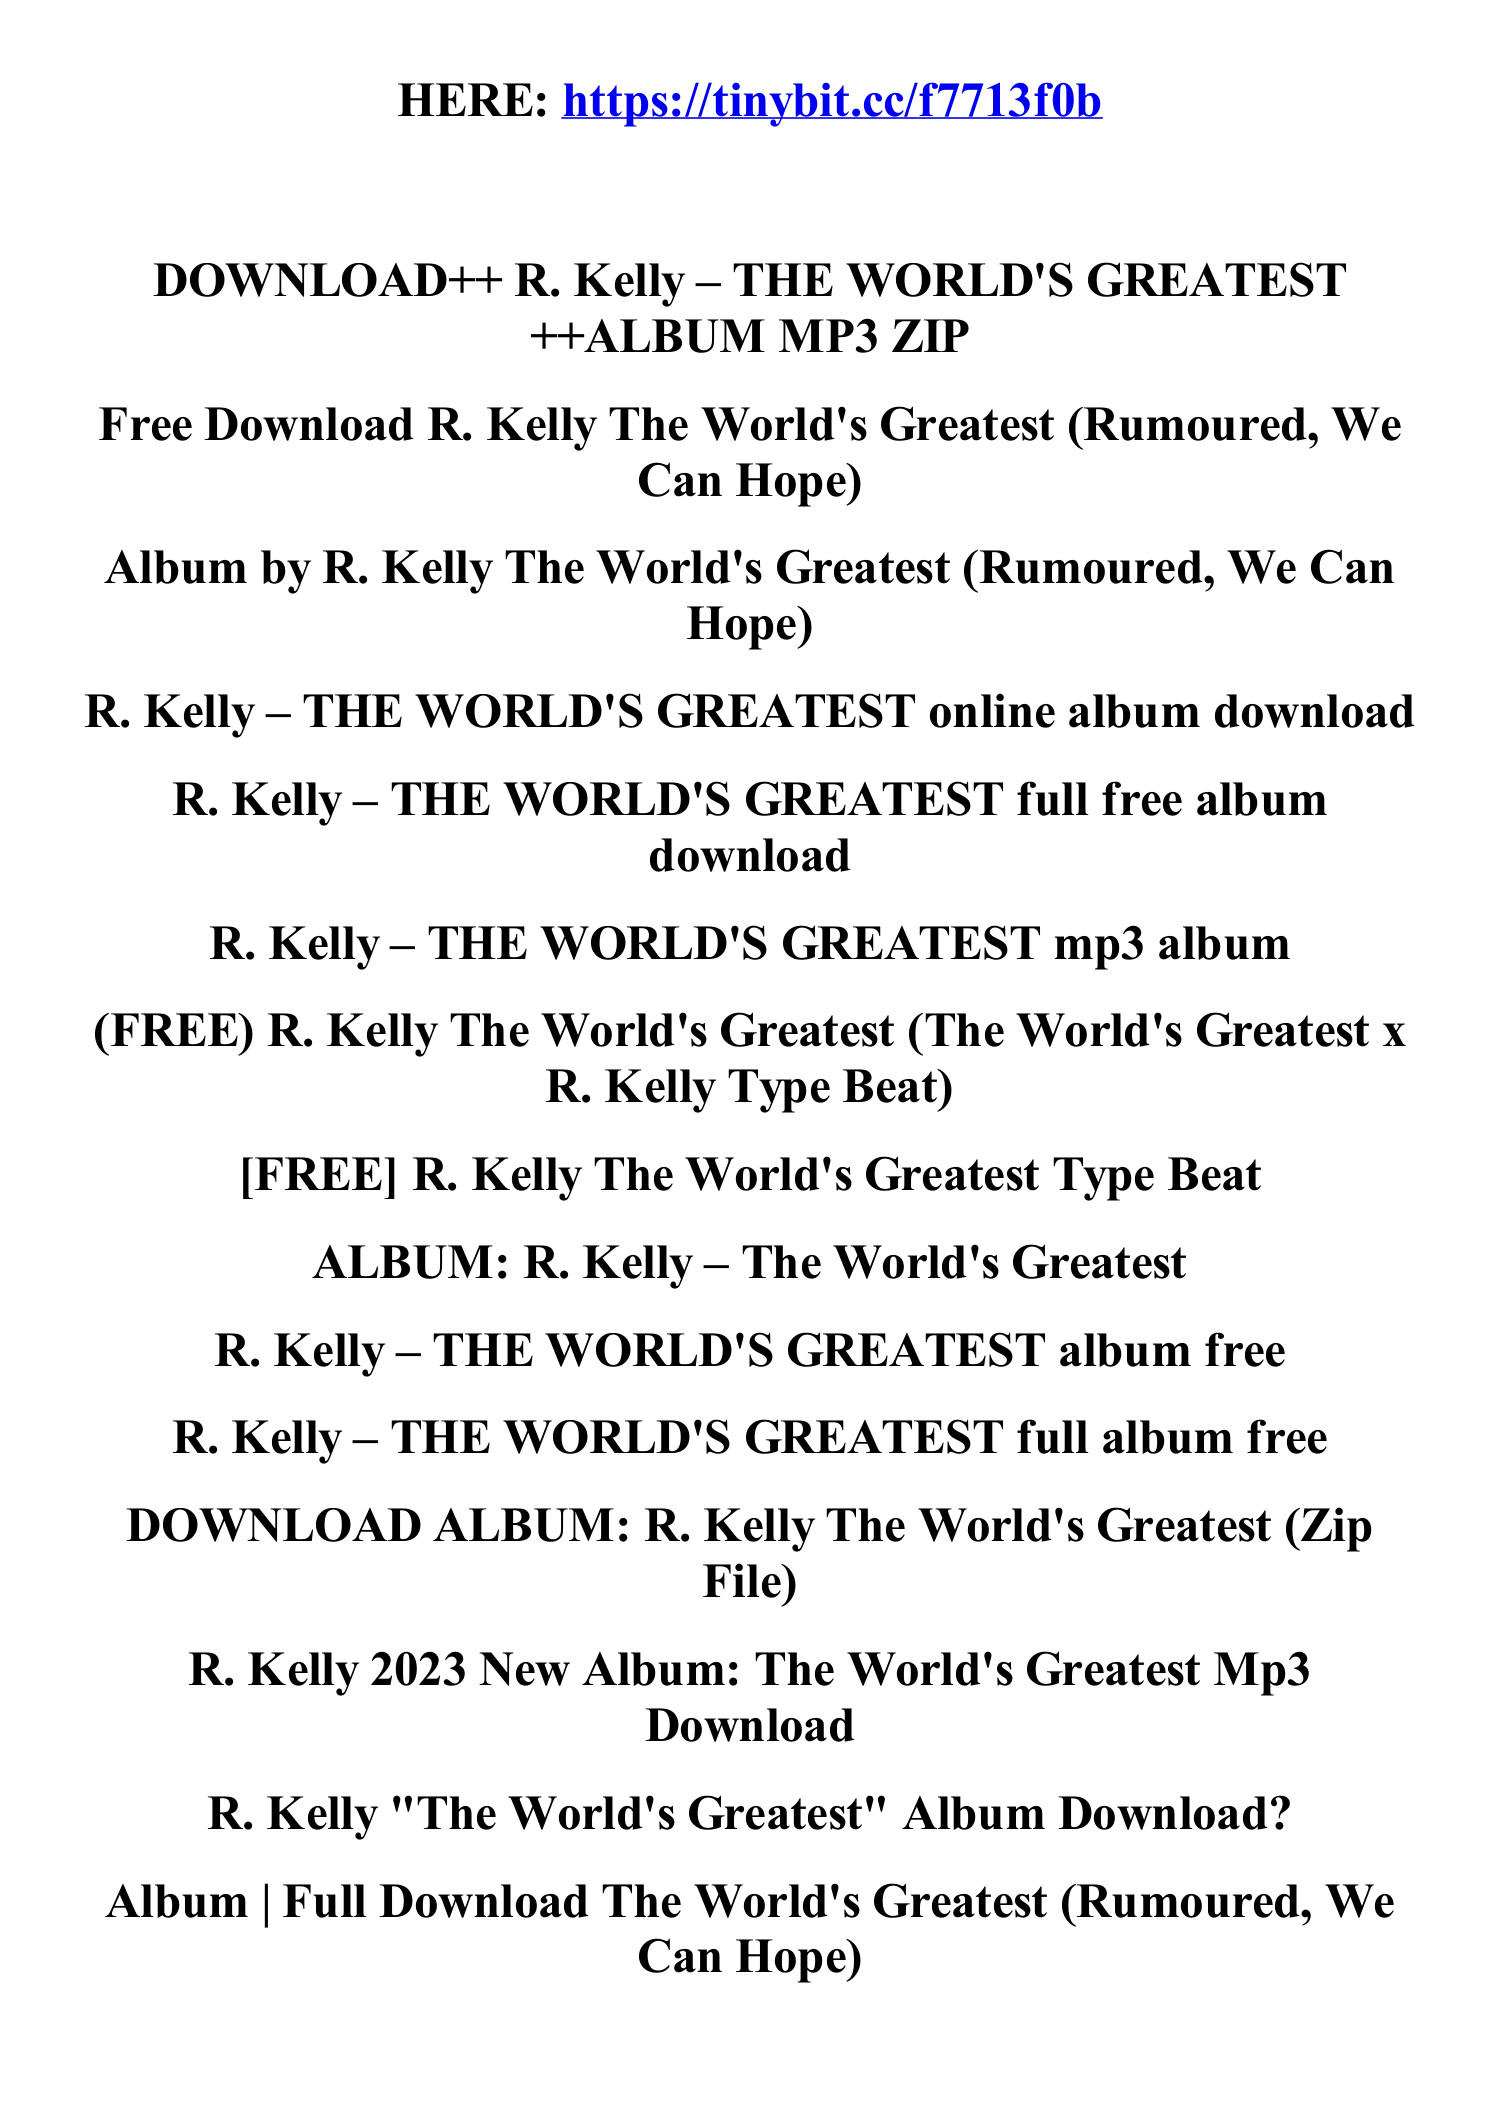 Best of R kelly album download